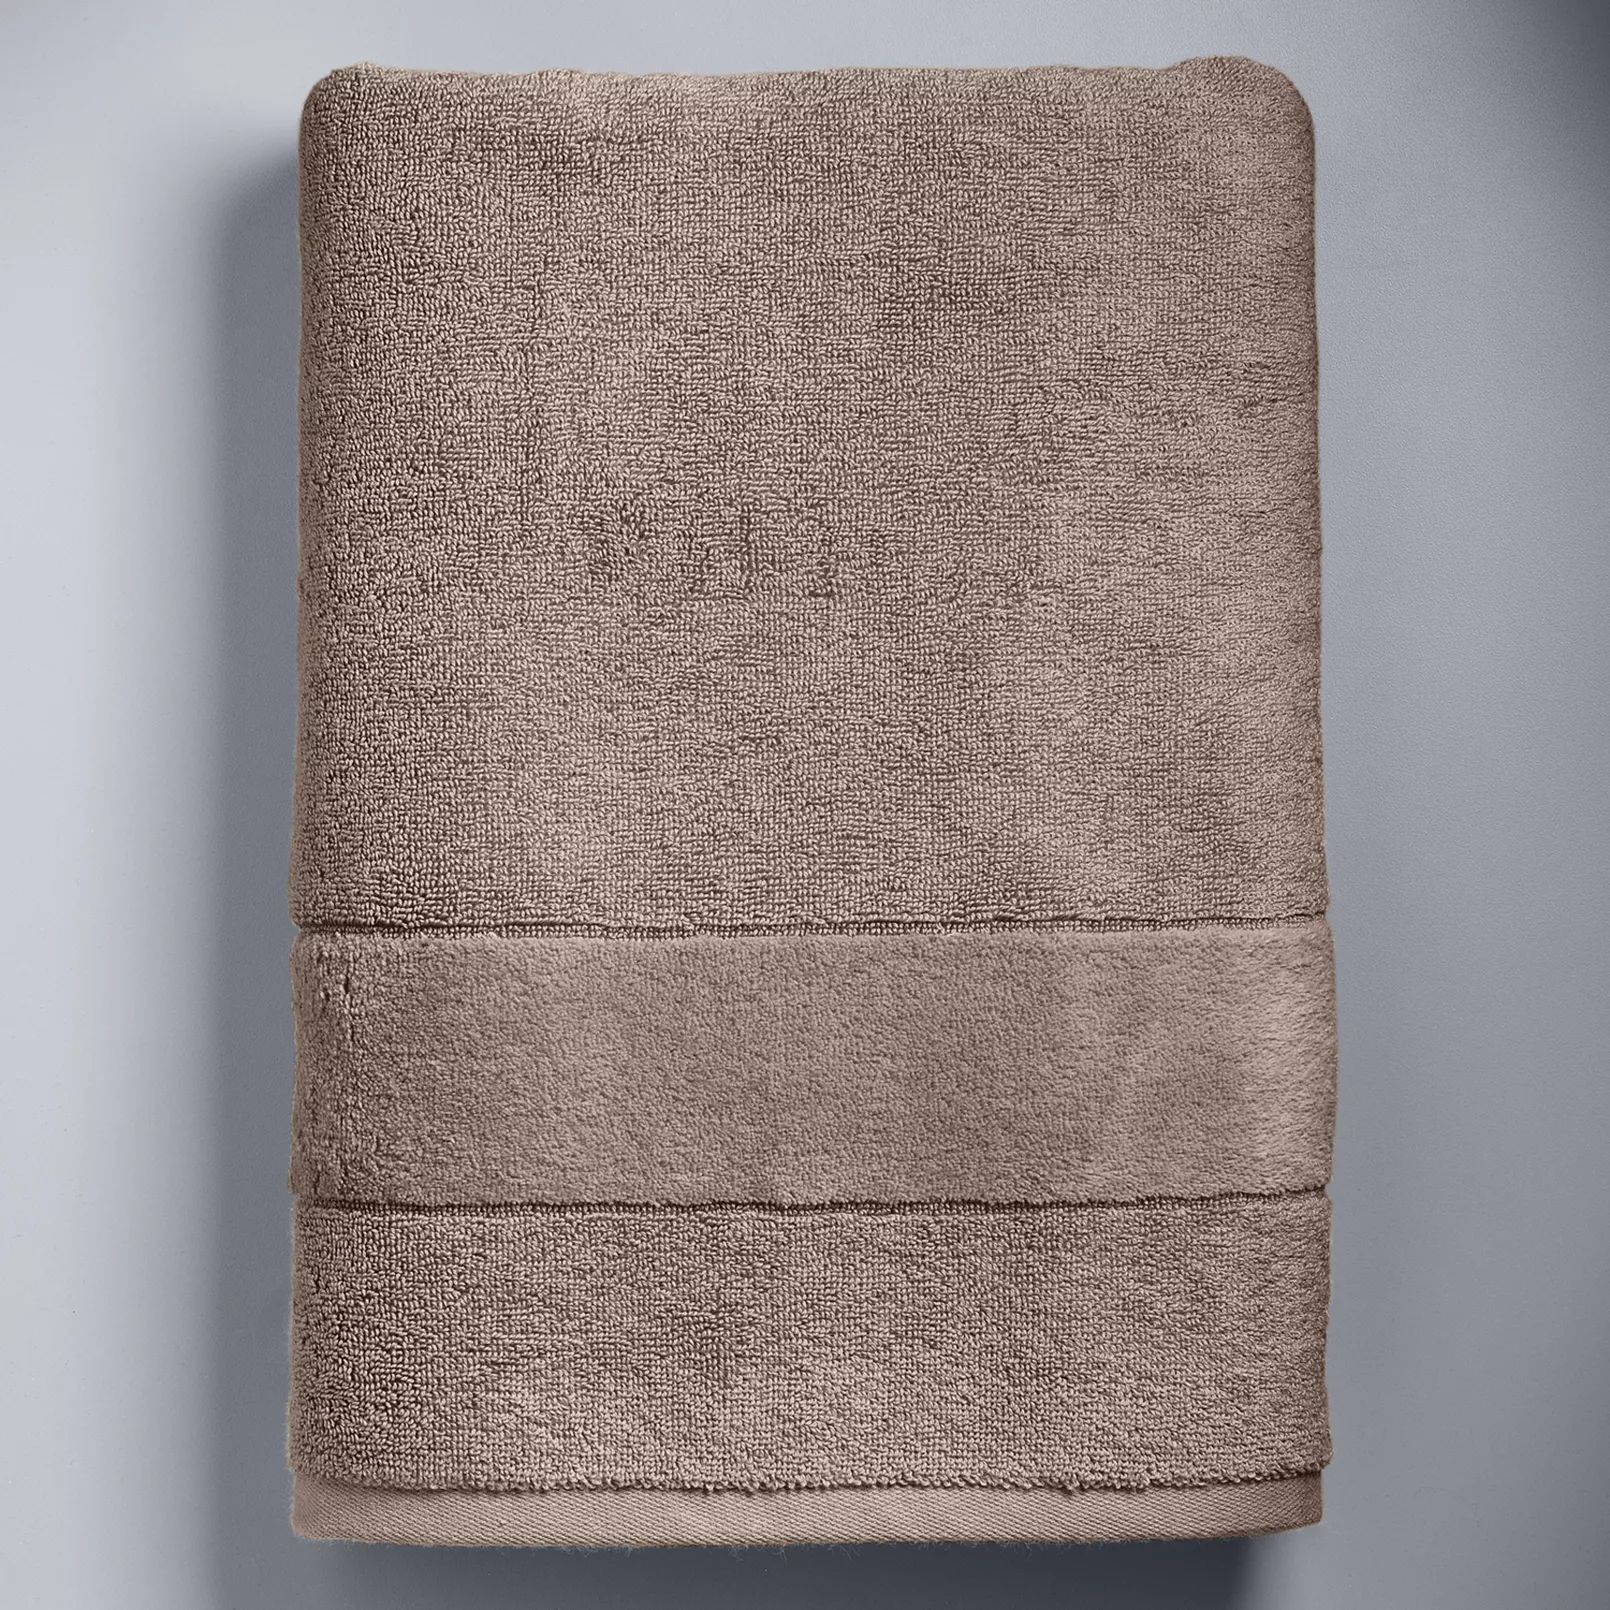 Simply Vera Vera Wang Turkish Cotton Bath Towel, Bath Sheet, Hand Towel or Washcloth | Kohl's